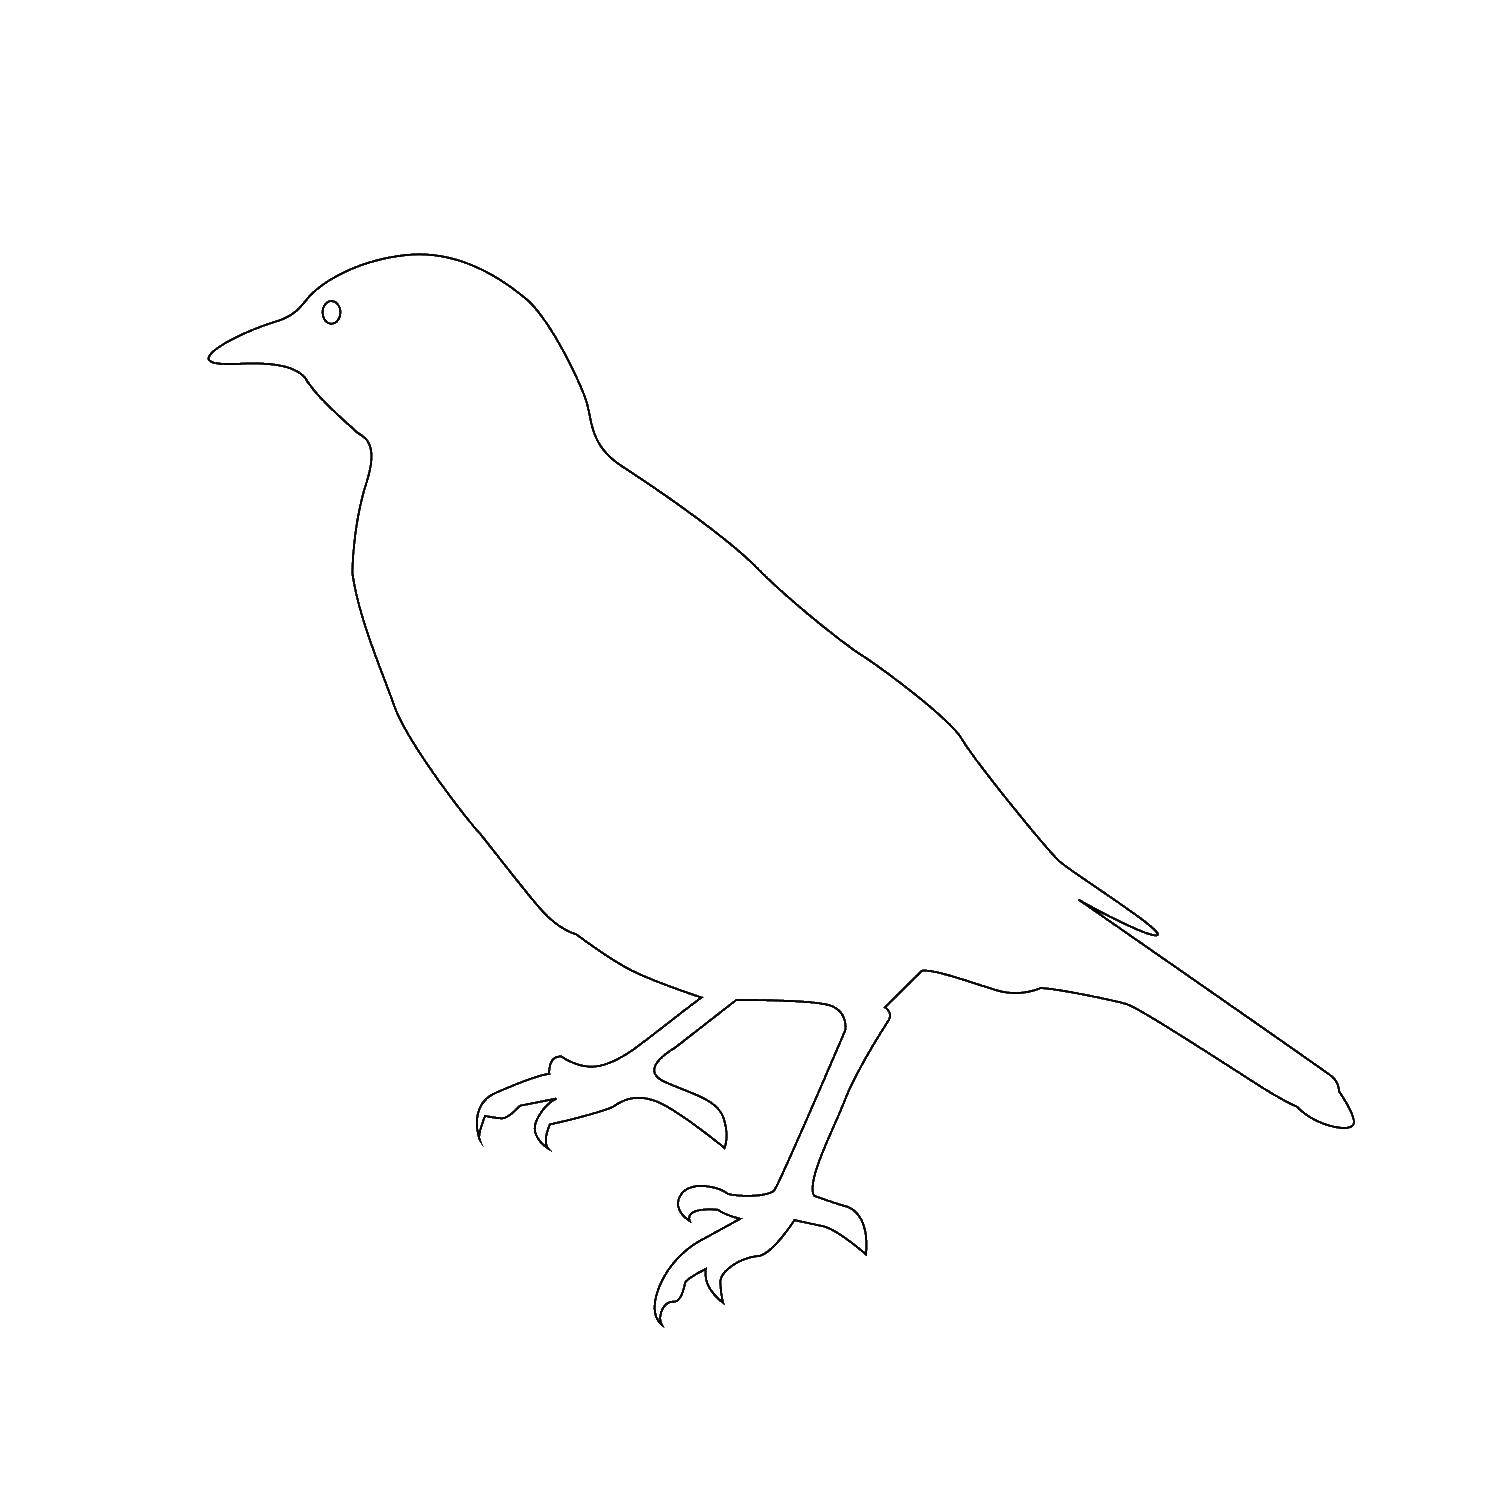 Название: Раскраска Птица сорока. Категория: Контуры птиц. Теги: сорока.